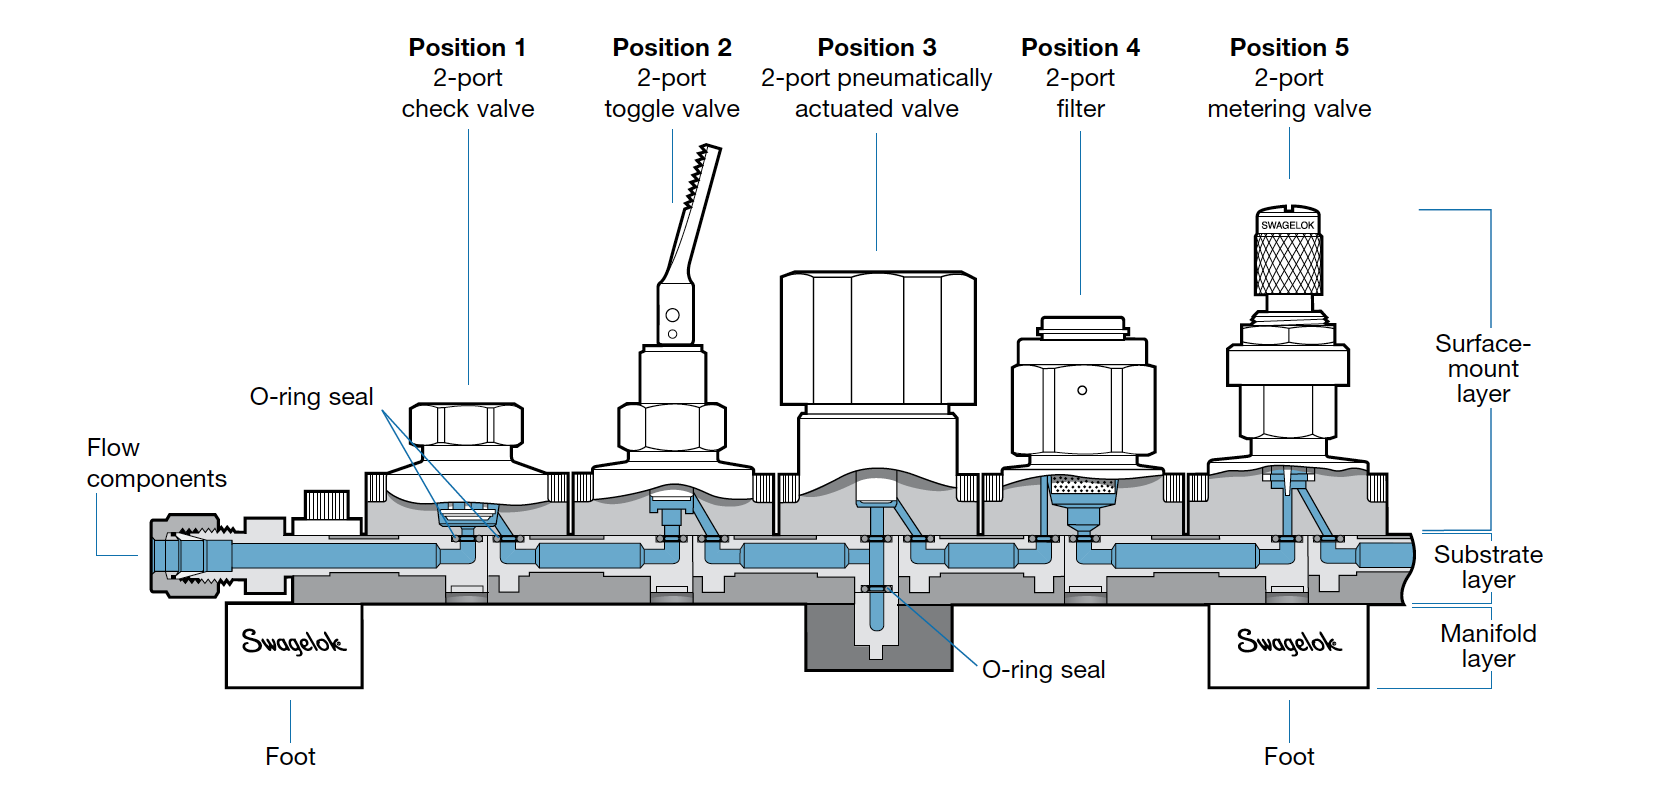 Swagelok Parts: Modular Platform Component Systems Set the Standard